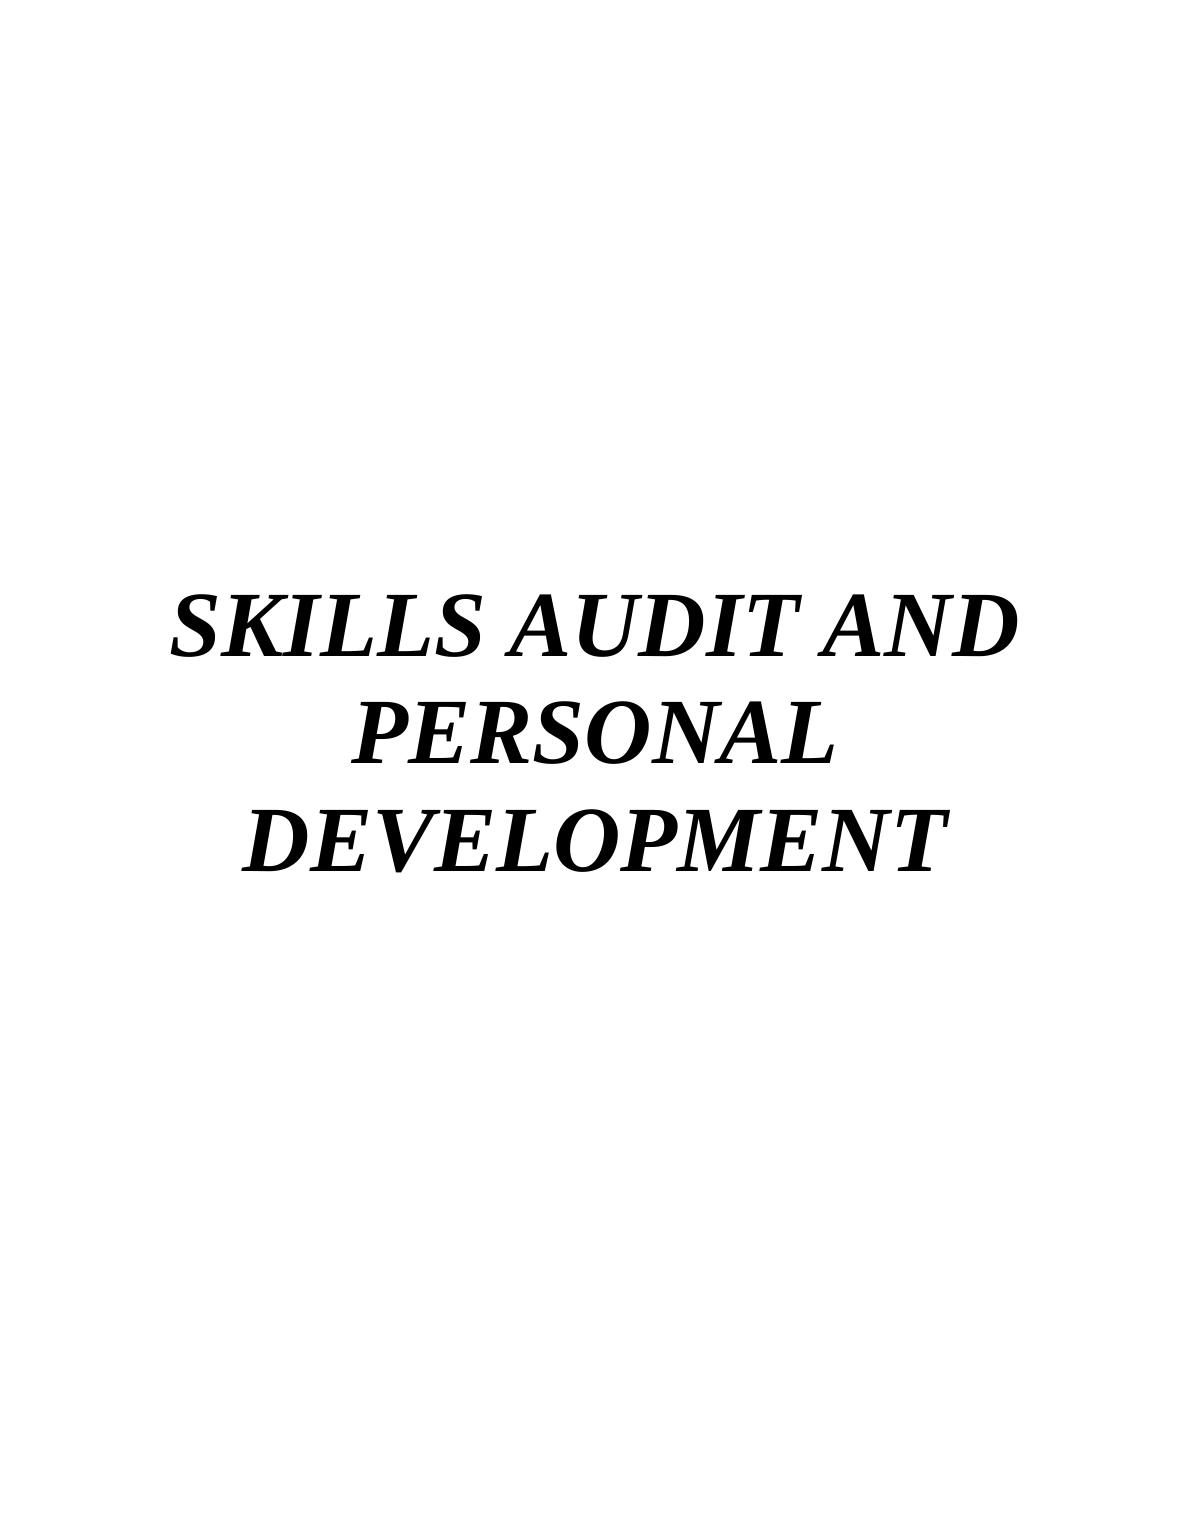 Personal Skill Audit and Professional Development (pdf)_1